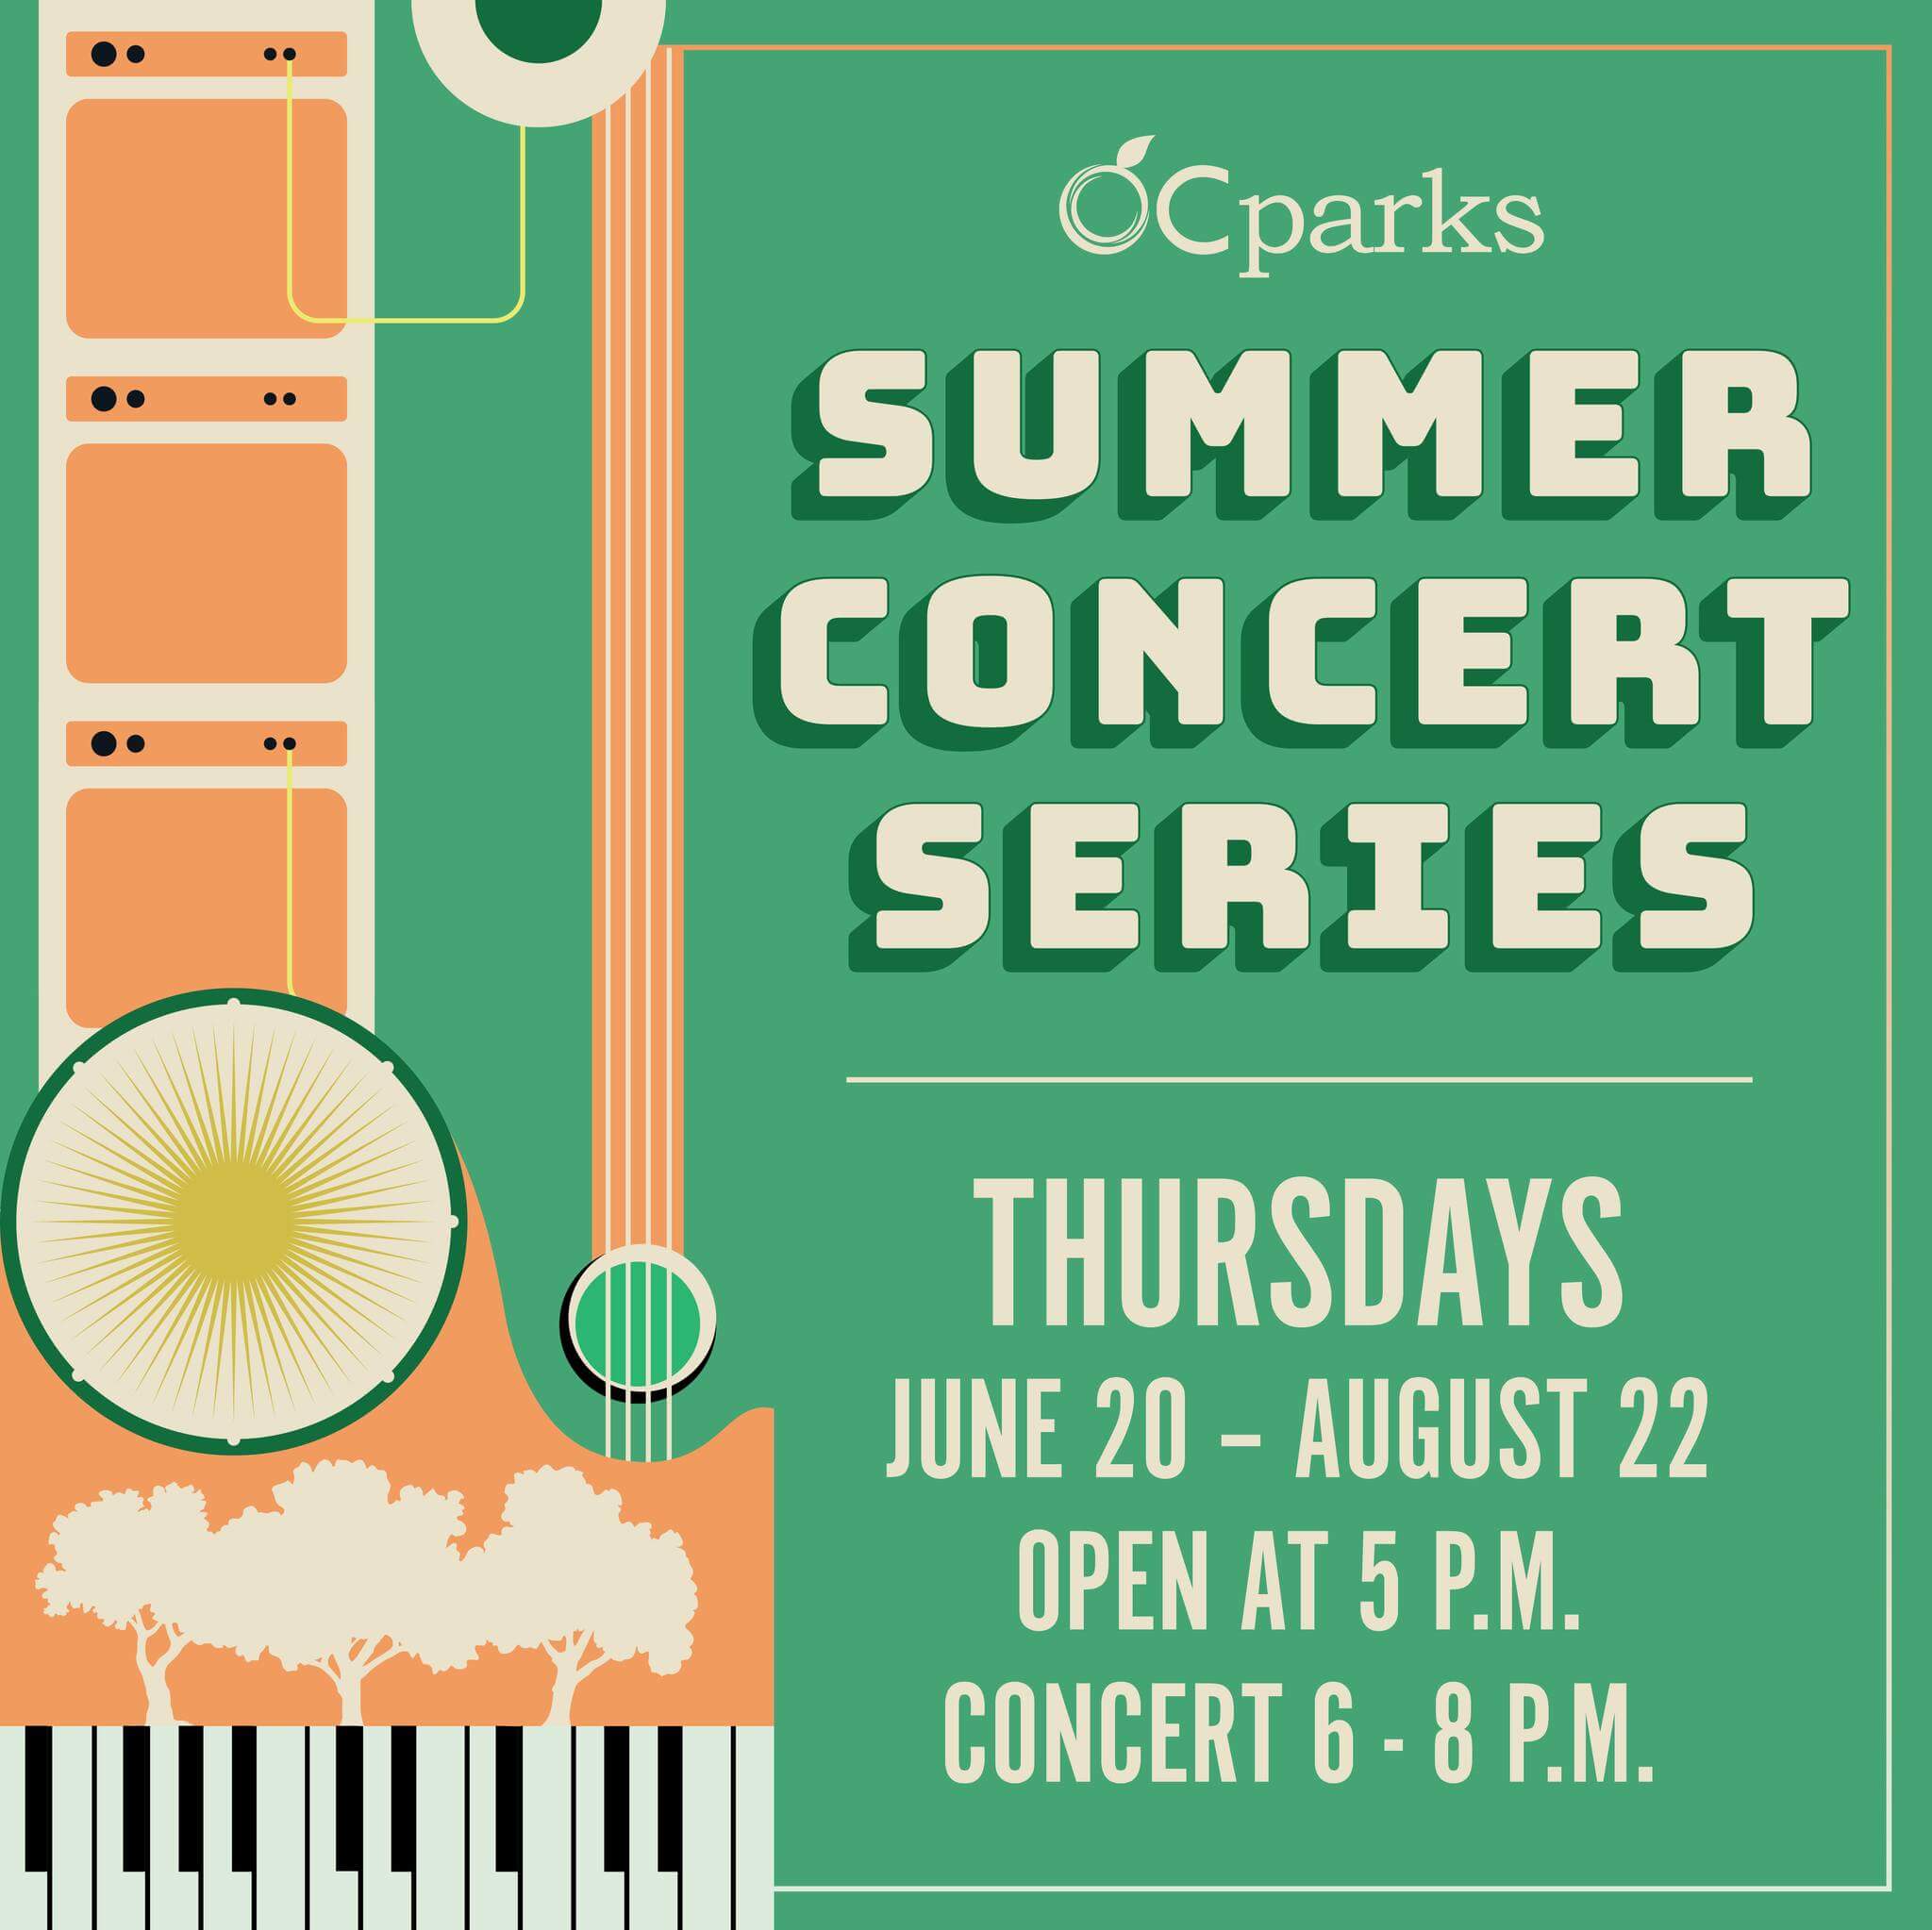 OC Parks Summer Concert Series